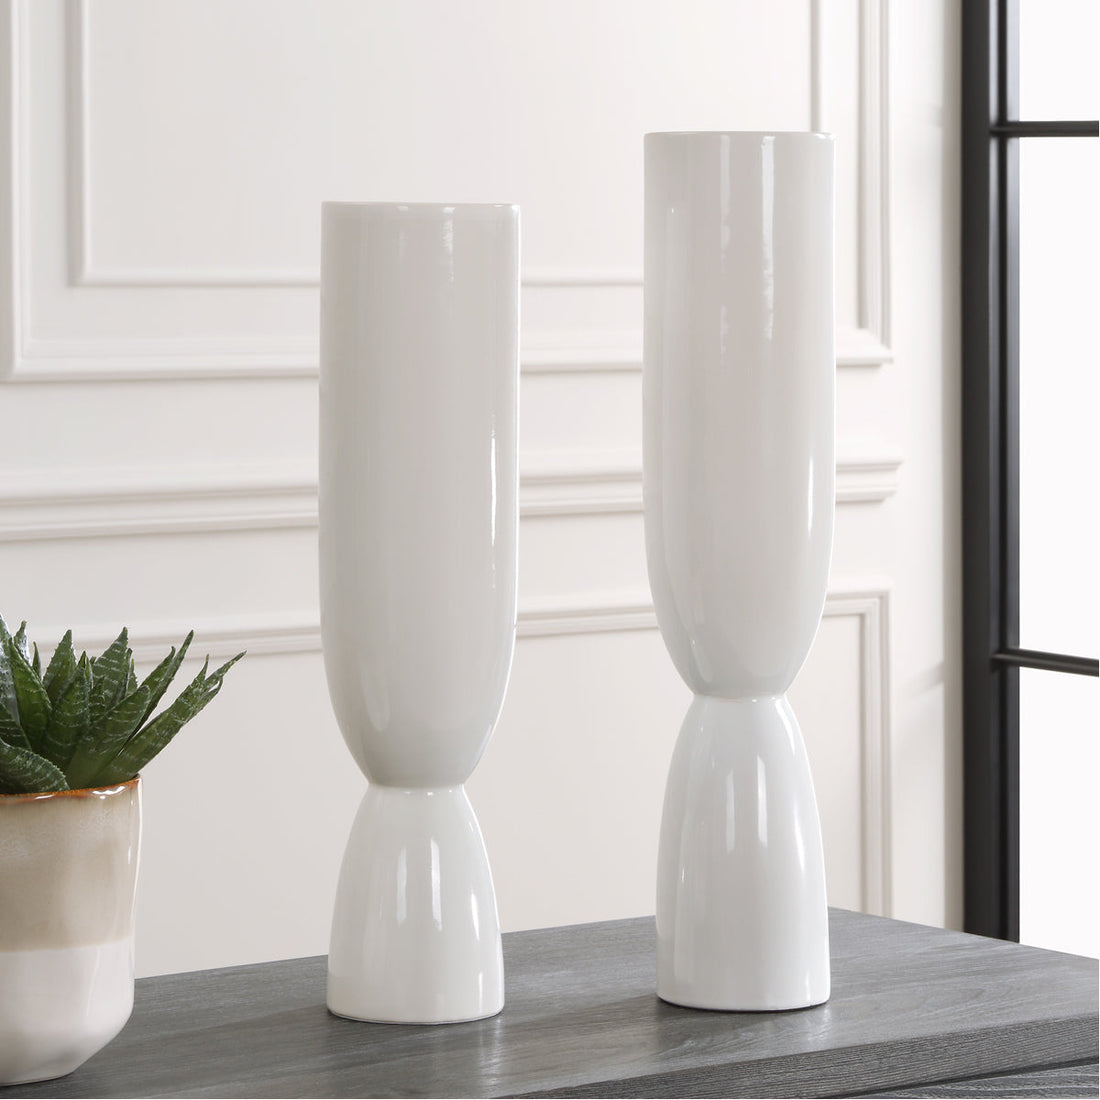 Uttermost Kimist White Vases, 2-Piece Set